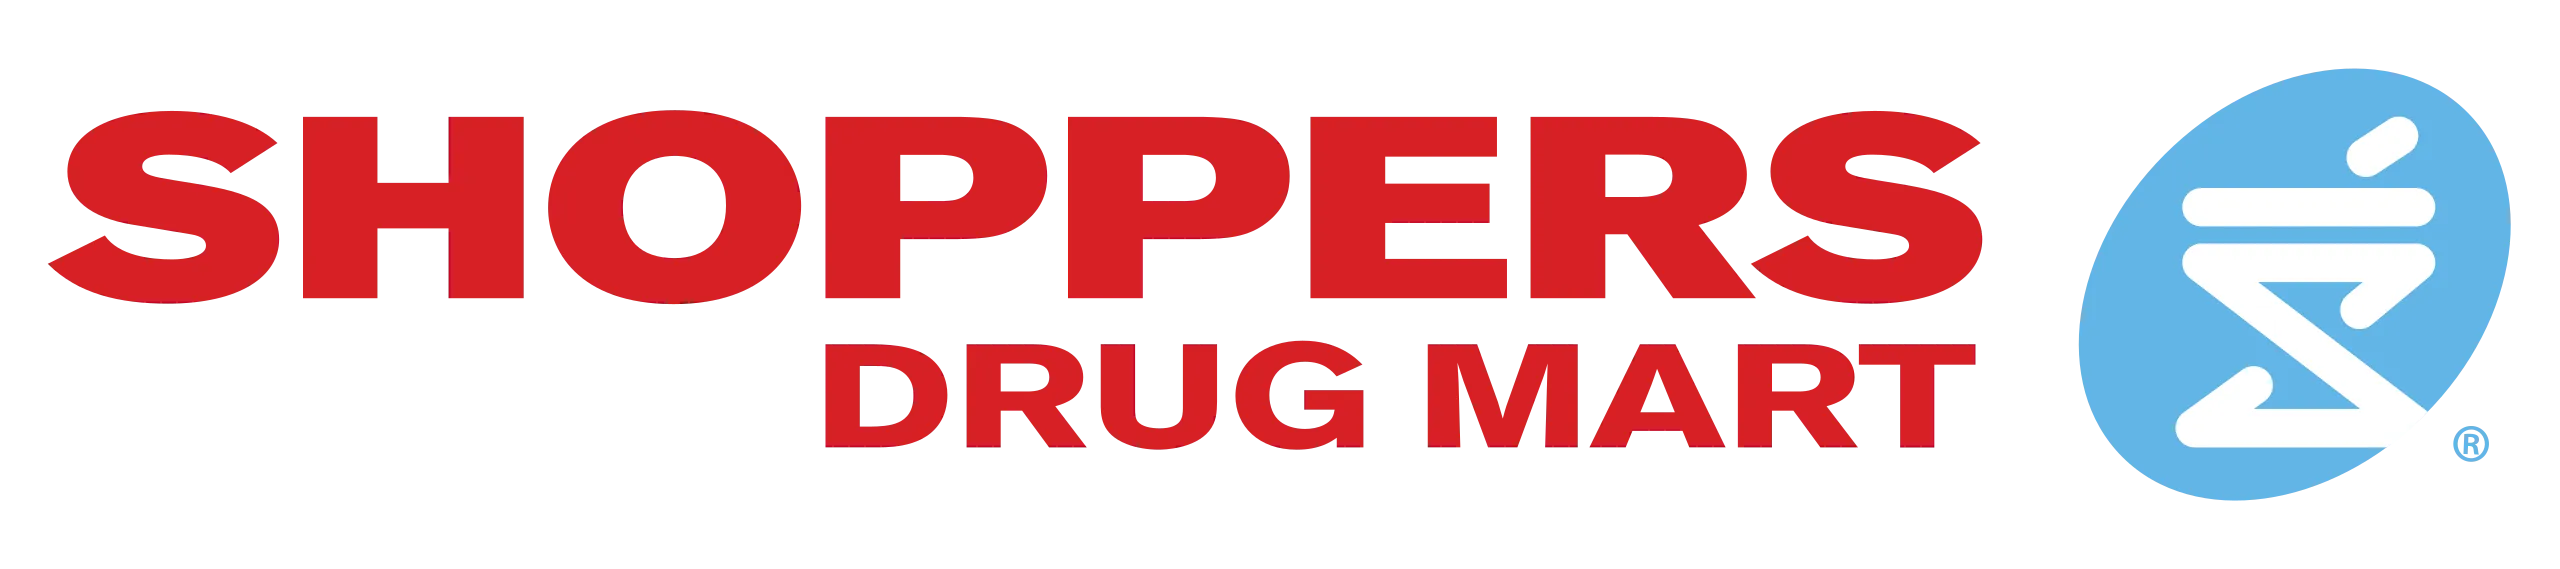 Shoppers Drug Mart Logo | Aulcorp